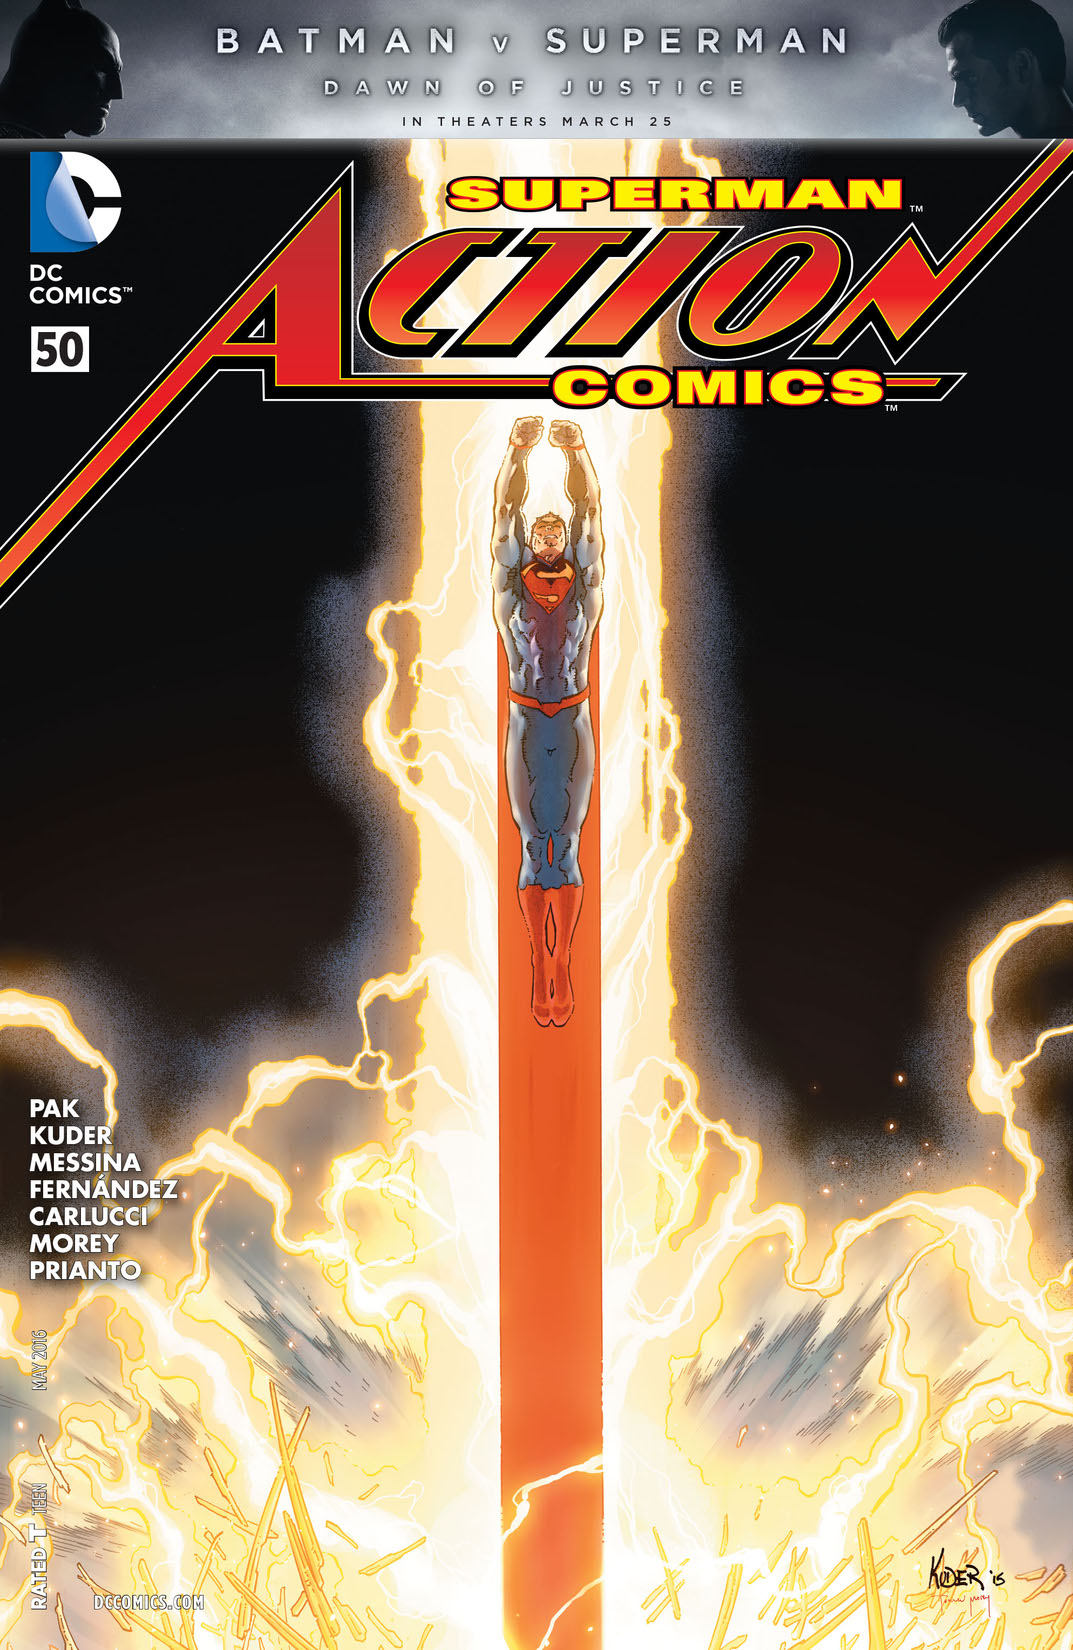 Action Comics (2011-) #50 preview images